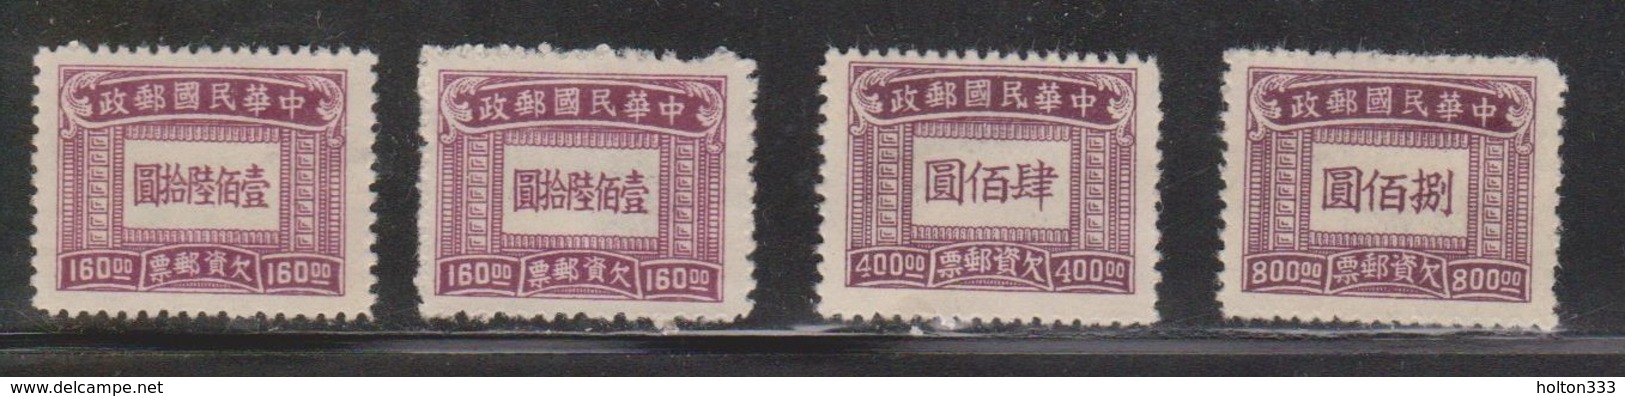 REPUBLIC OF CHINA Scott # J96, J98, J100 MNG - Unused Stamps